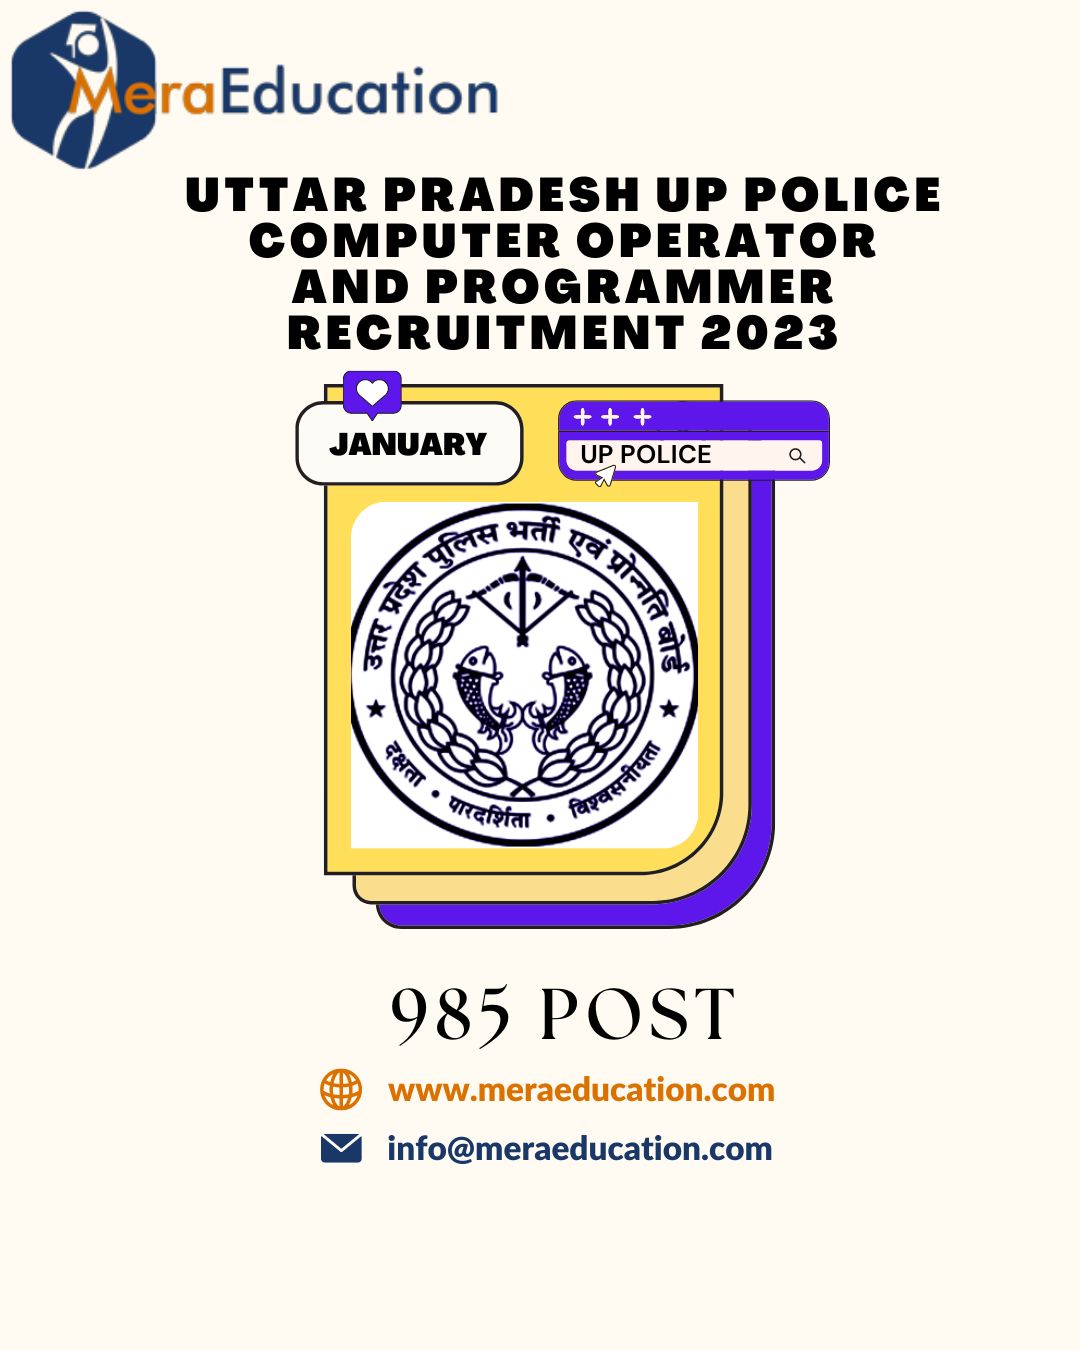 Uttar Pradesh UP Police Computer Operator and Programmer Recruitment